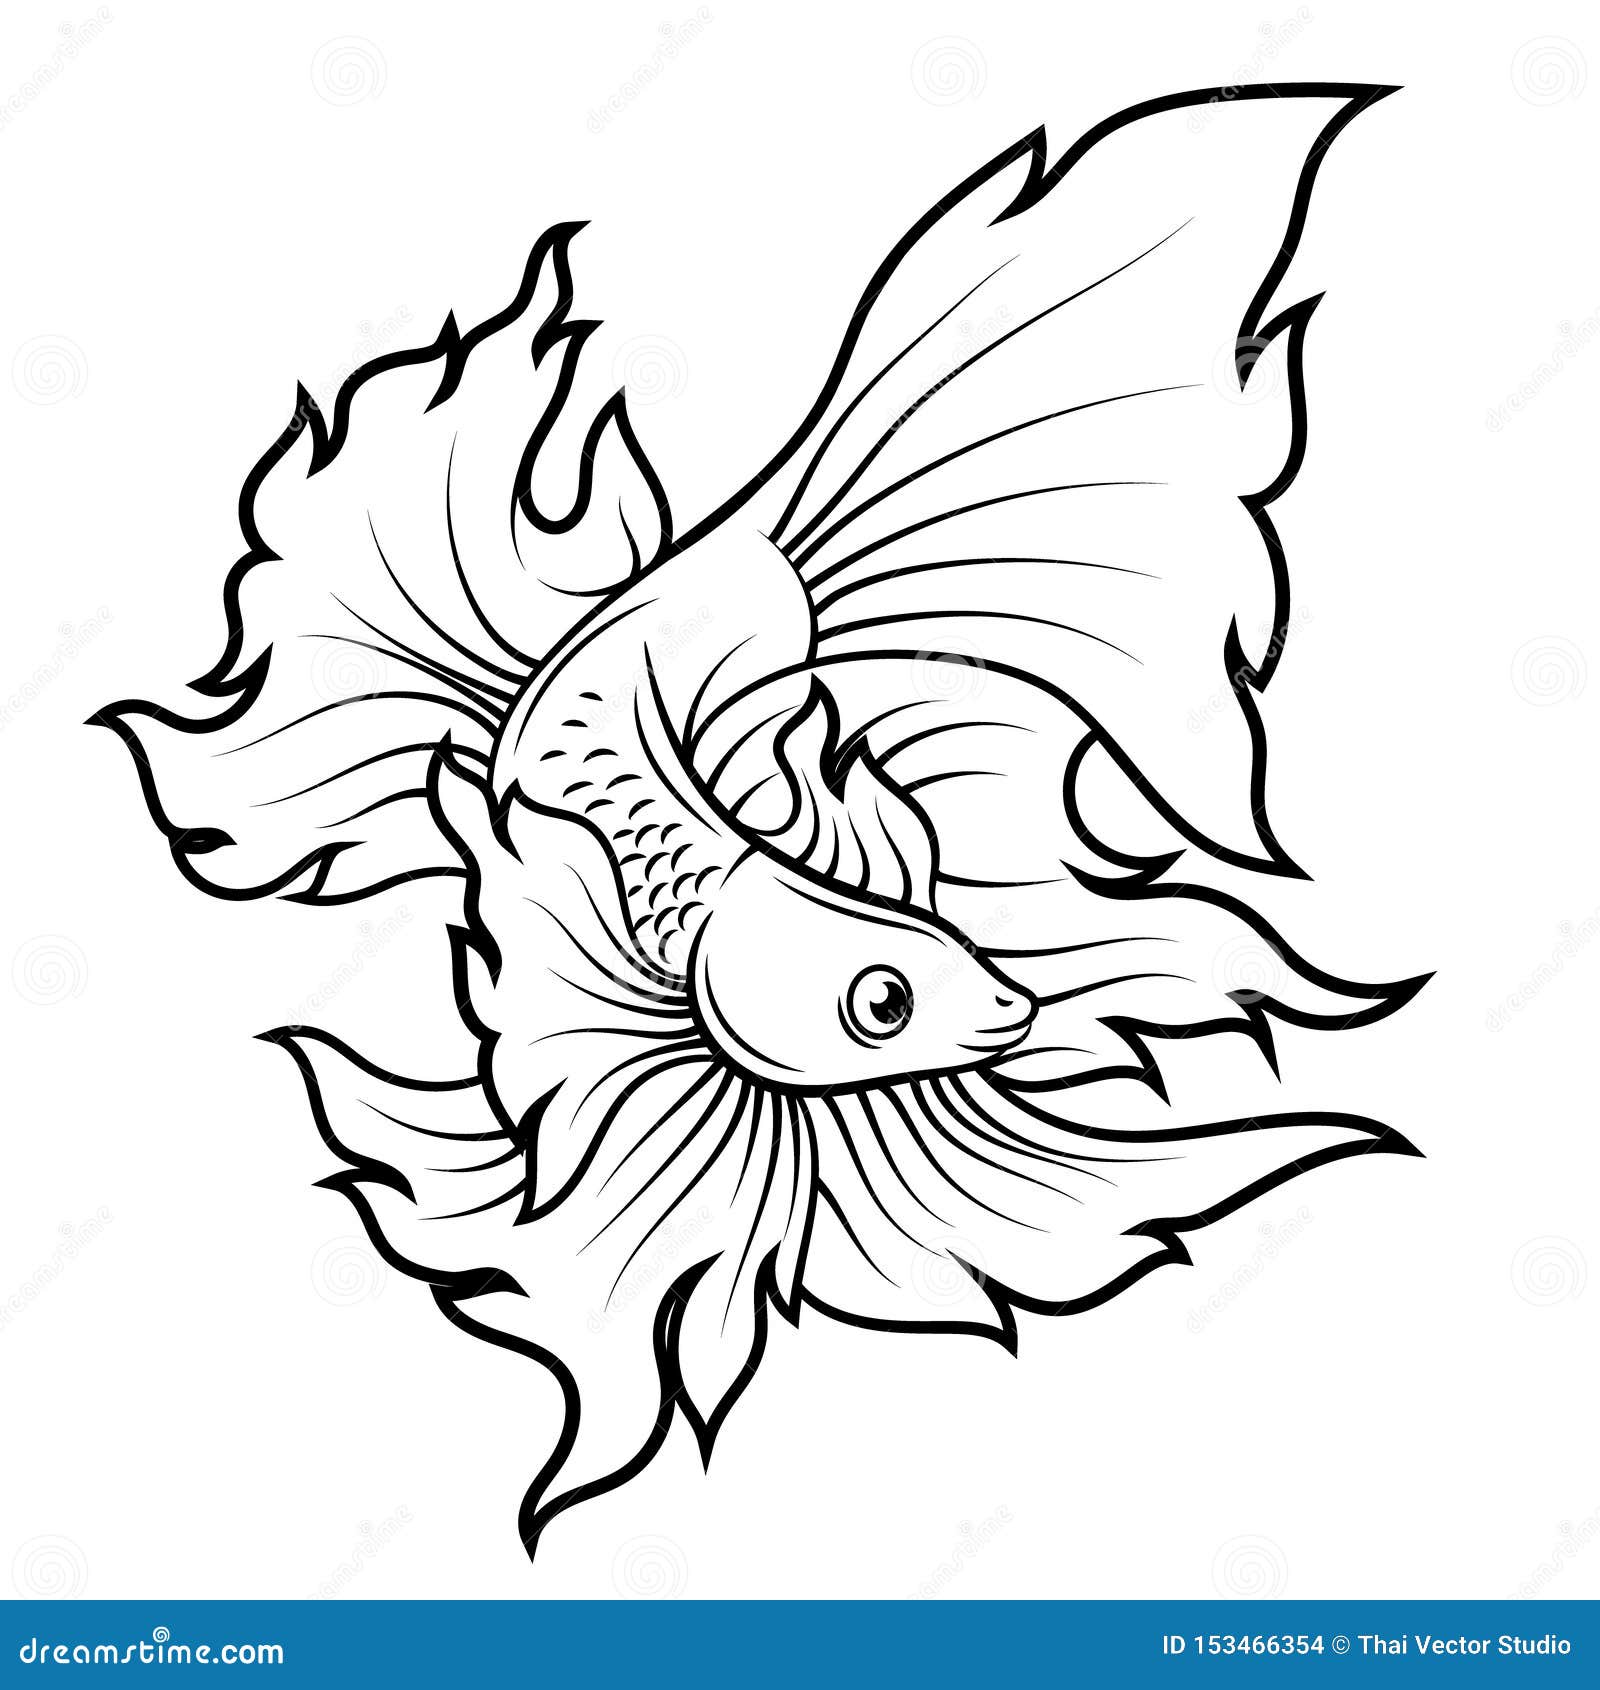 betta fish illustration